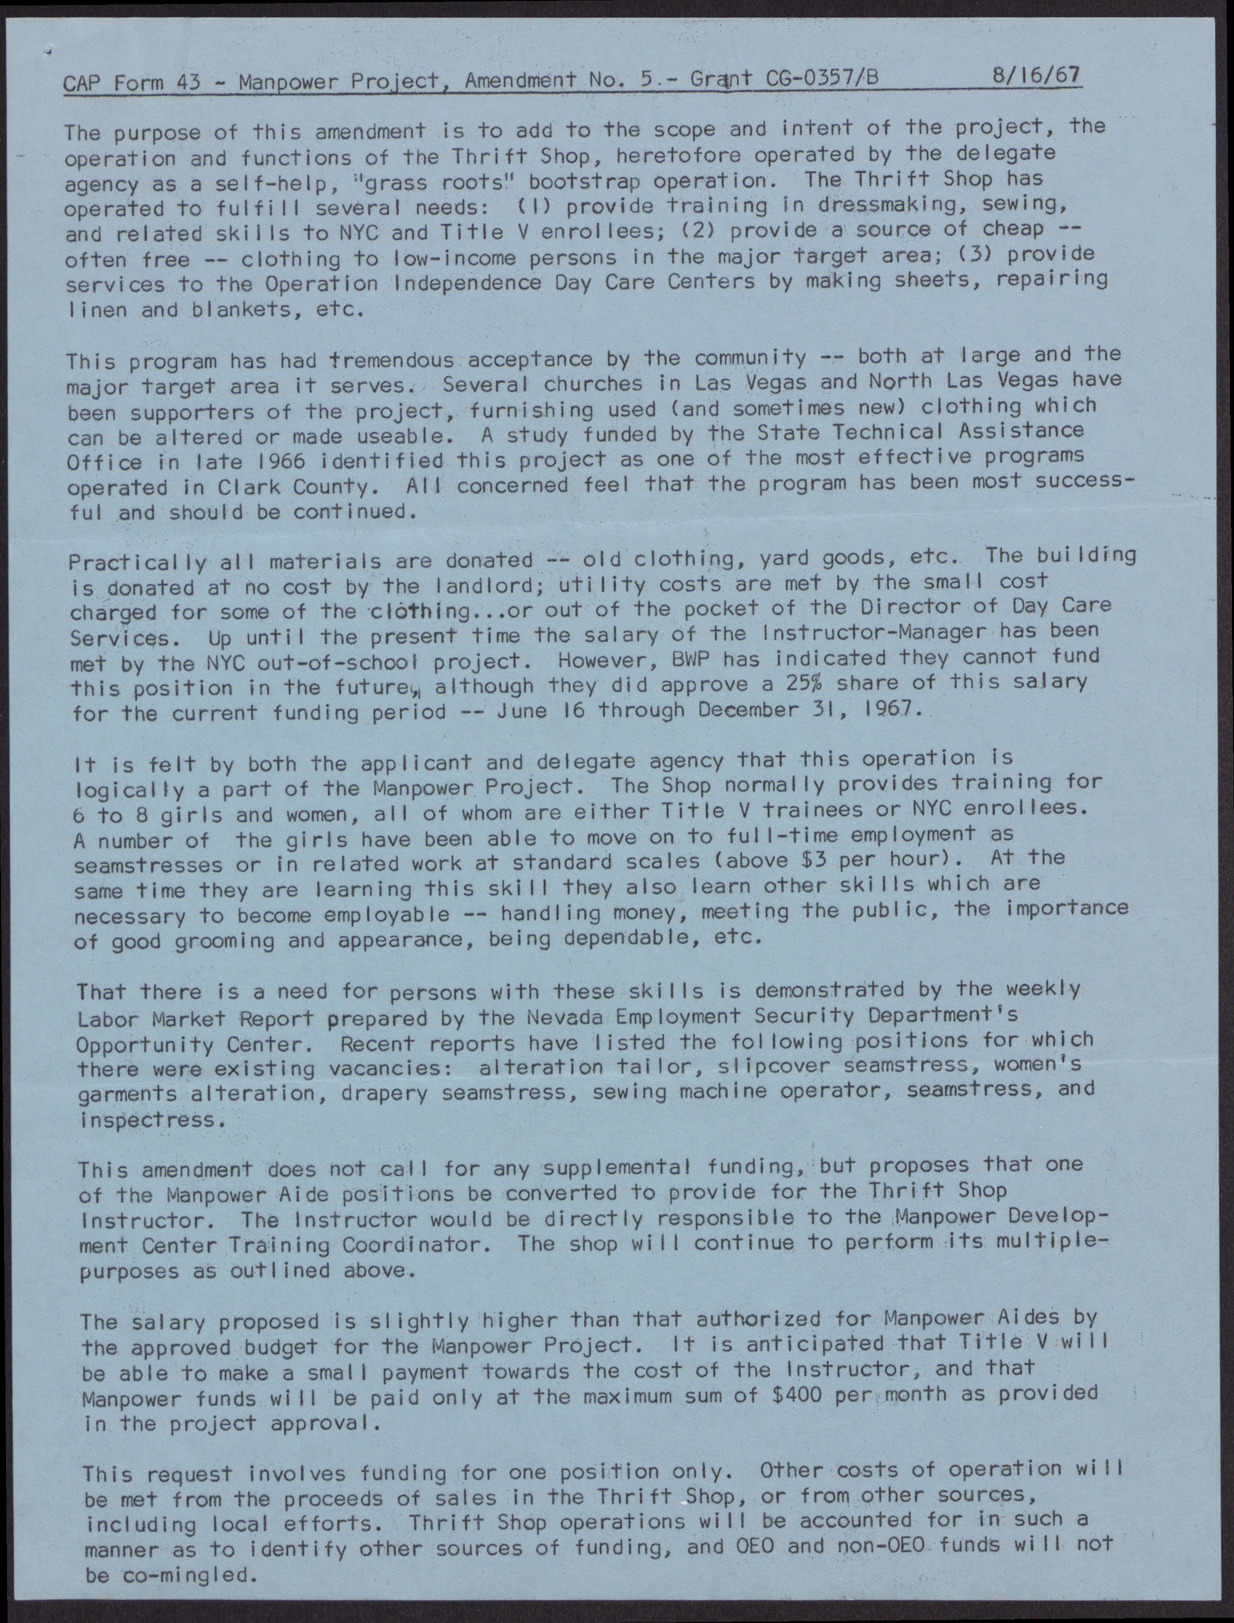 Manpower Project, Amendment No. 5 (2 pages), August 16, 1967